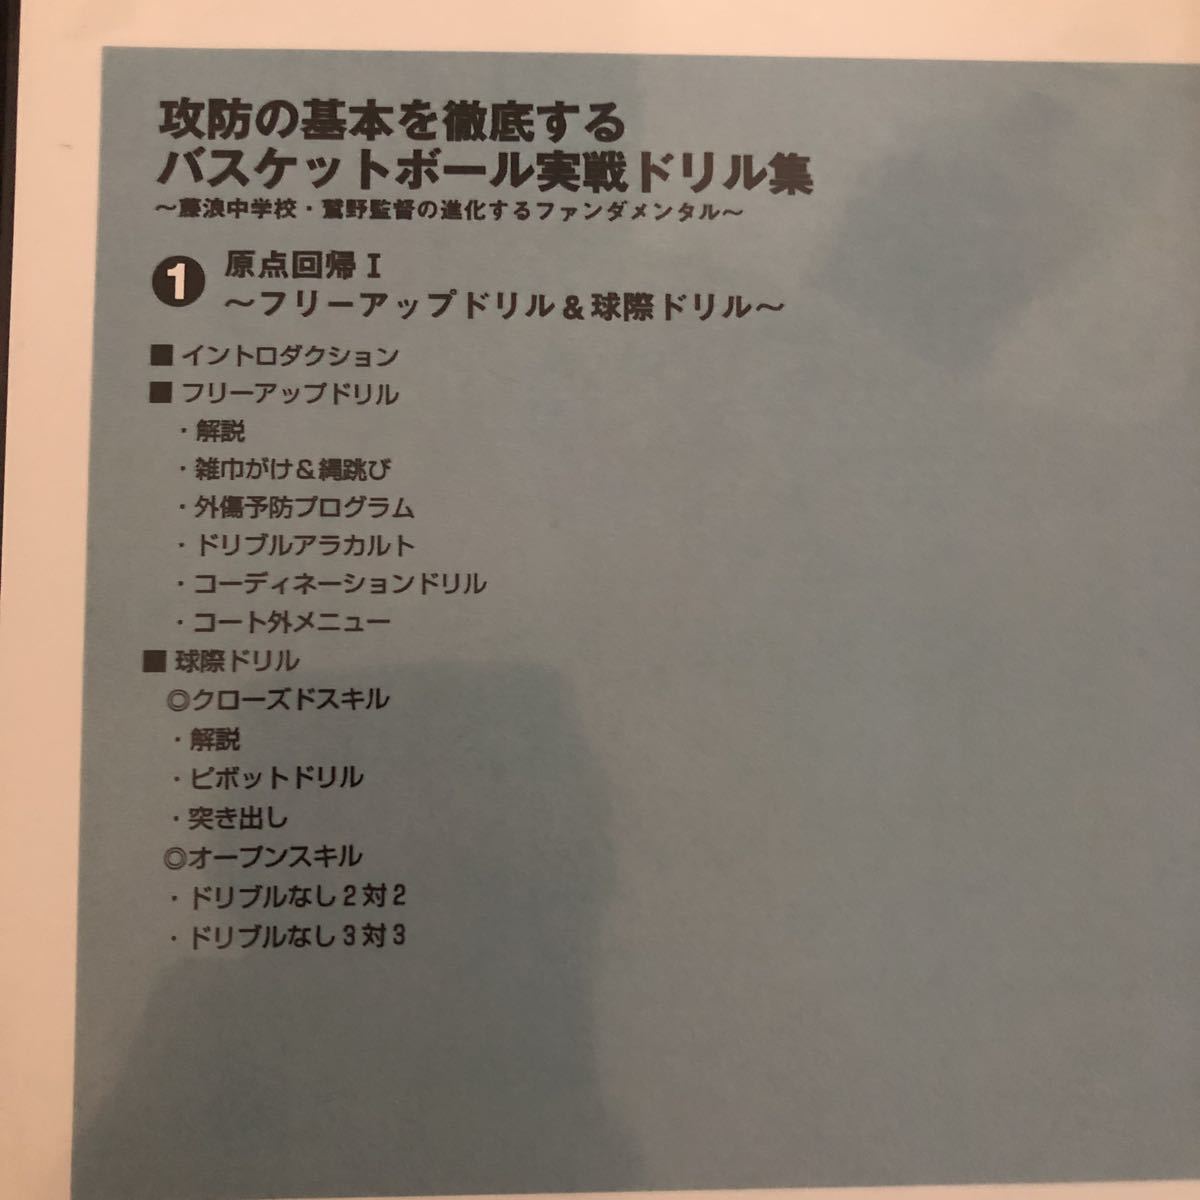  fan da men taruJBA top Ende bar Japan representative wistaria . basketball DVD JLG japan laim Japan lime ti fence o fence 